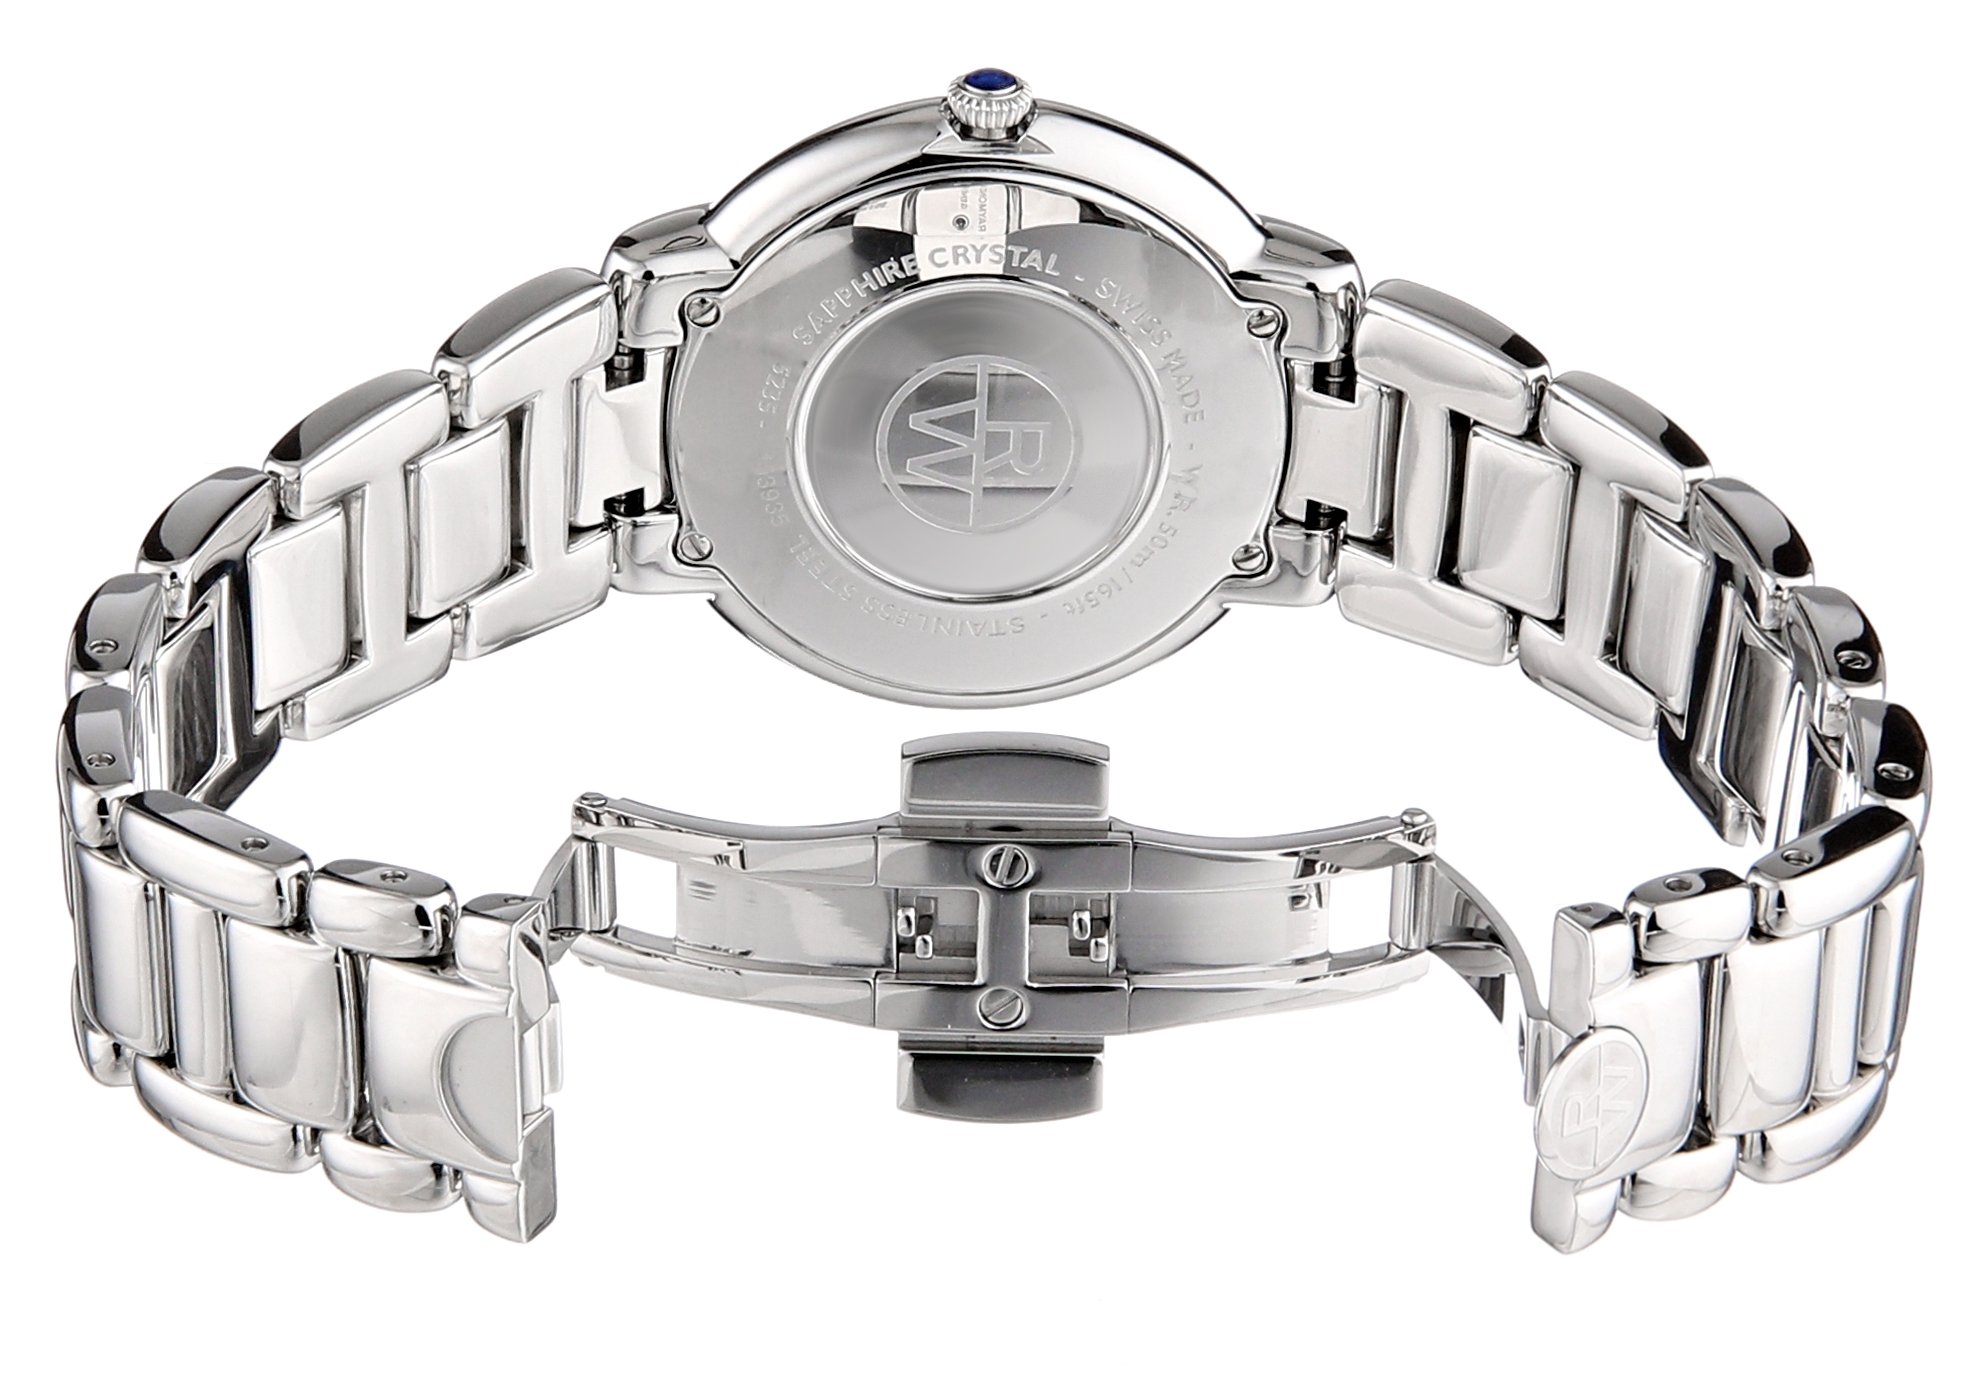 Raymond Weil Women's 5235-ST-01659 Jasmine Stainless Steel Bracelet Watch